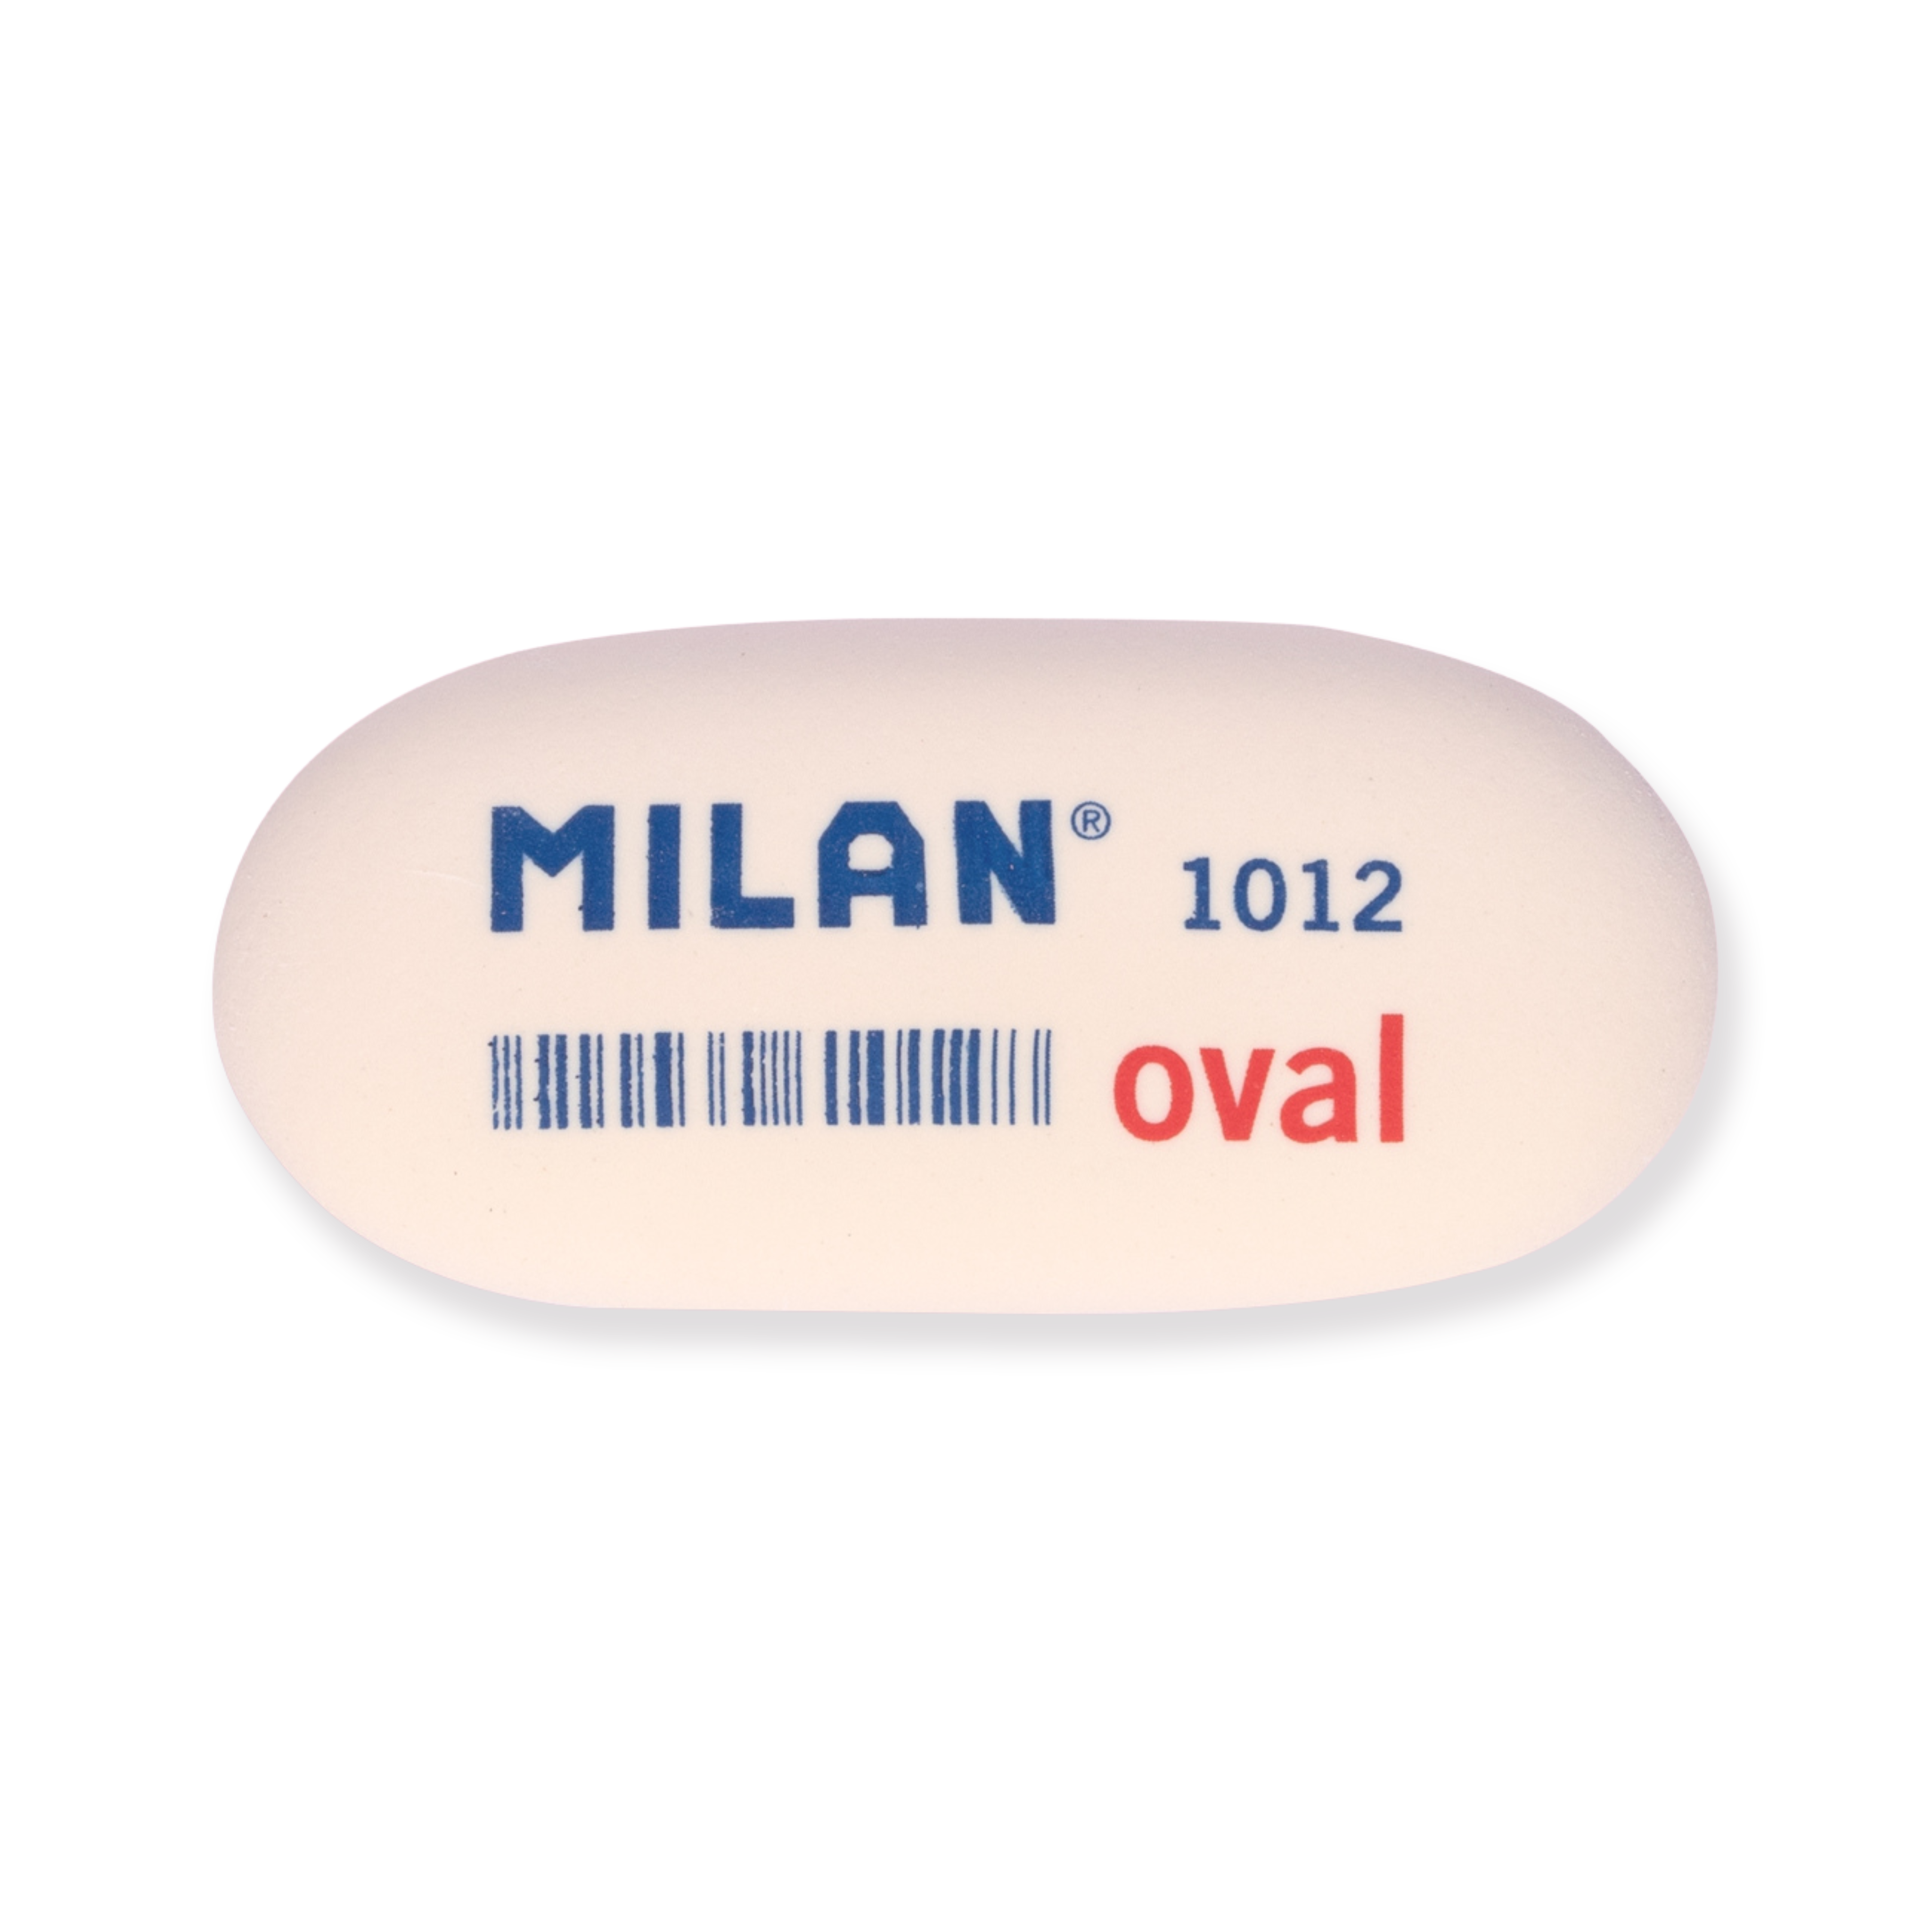 Ovaler Radiergummi „Milan“ – 1012